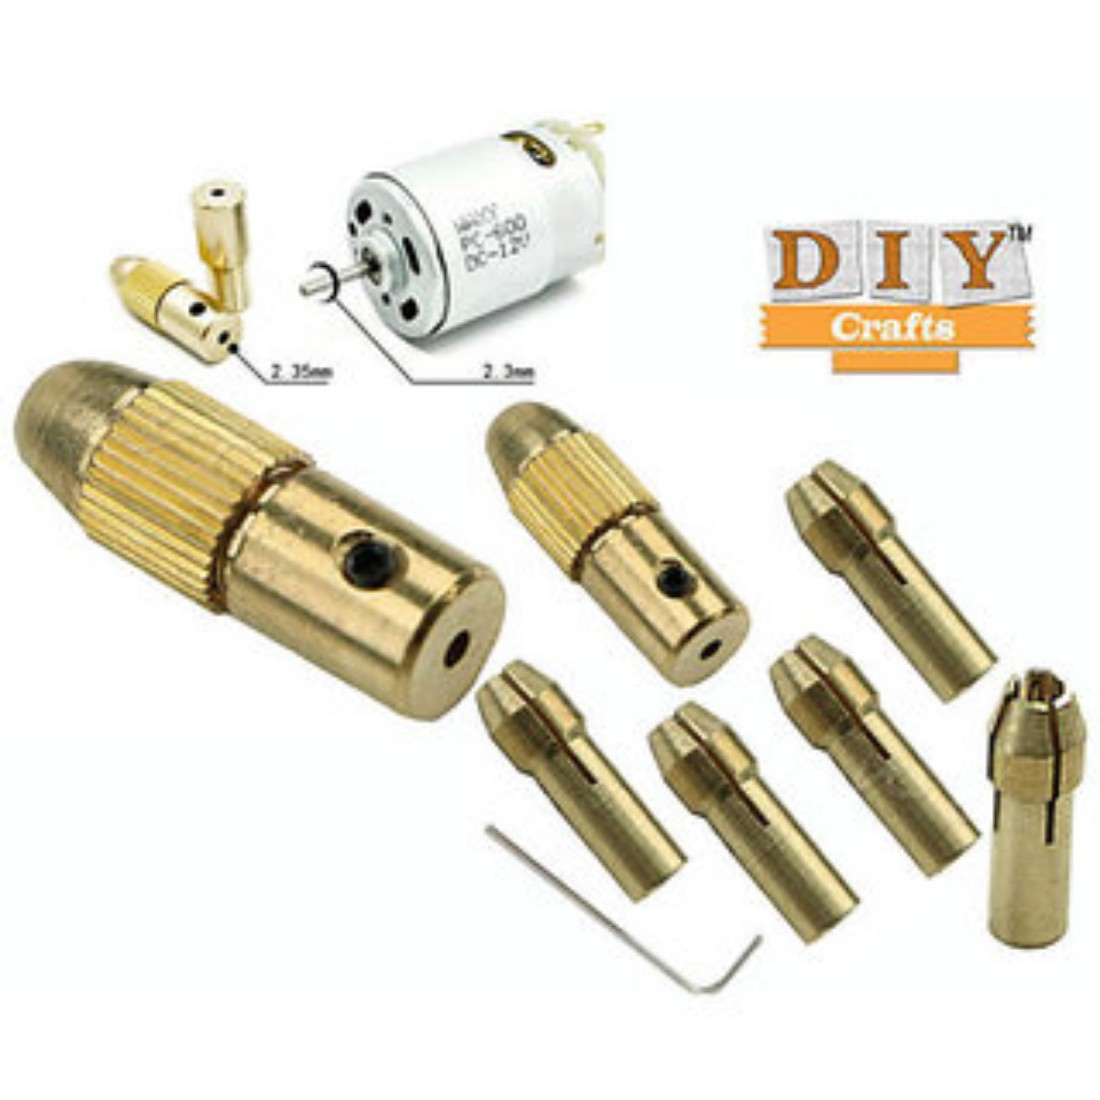 Buy DIY Crafts Mini Mirco Electric PCB Drill Press Drilling Bits Tool